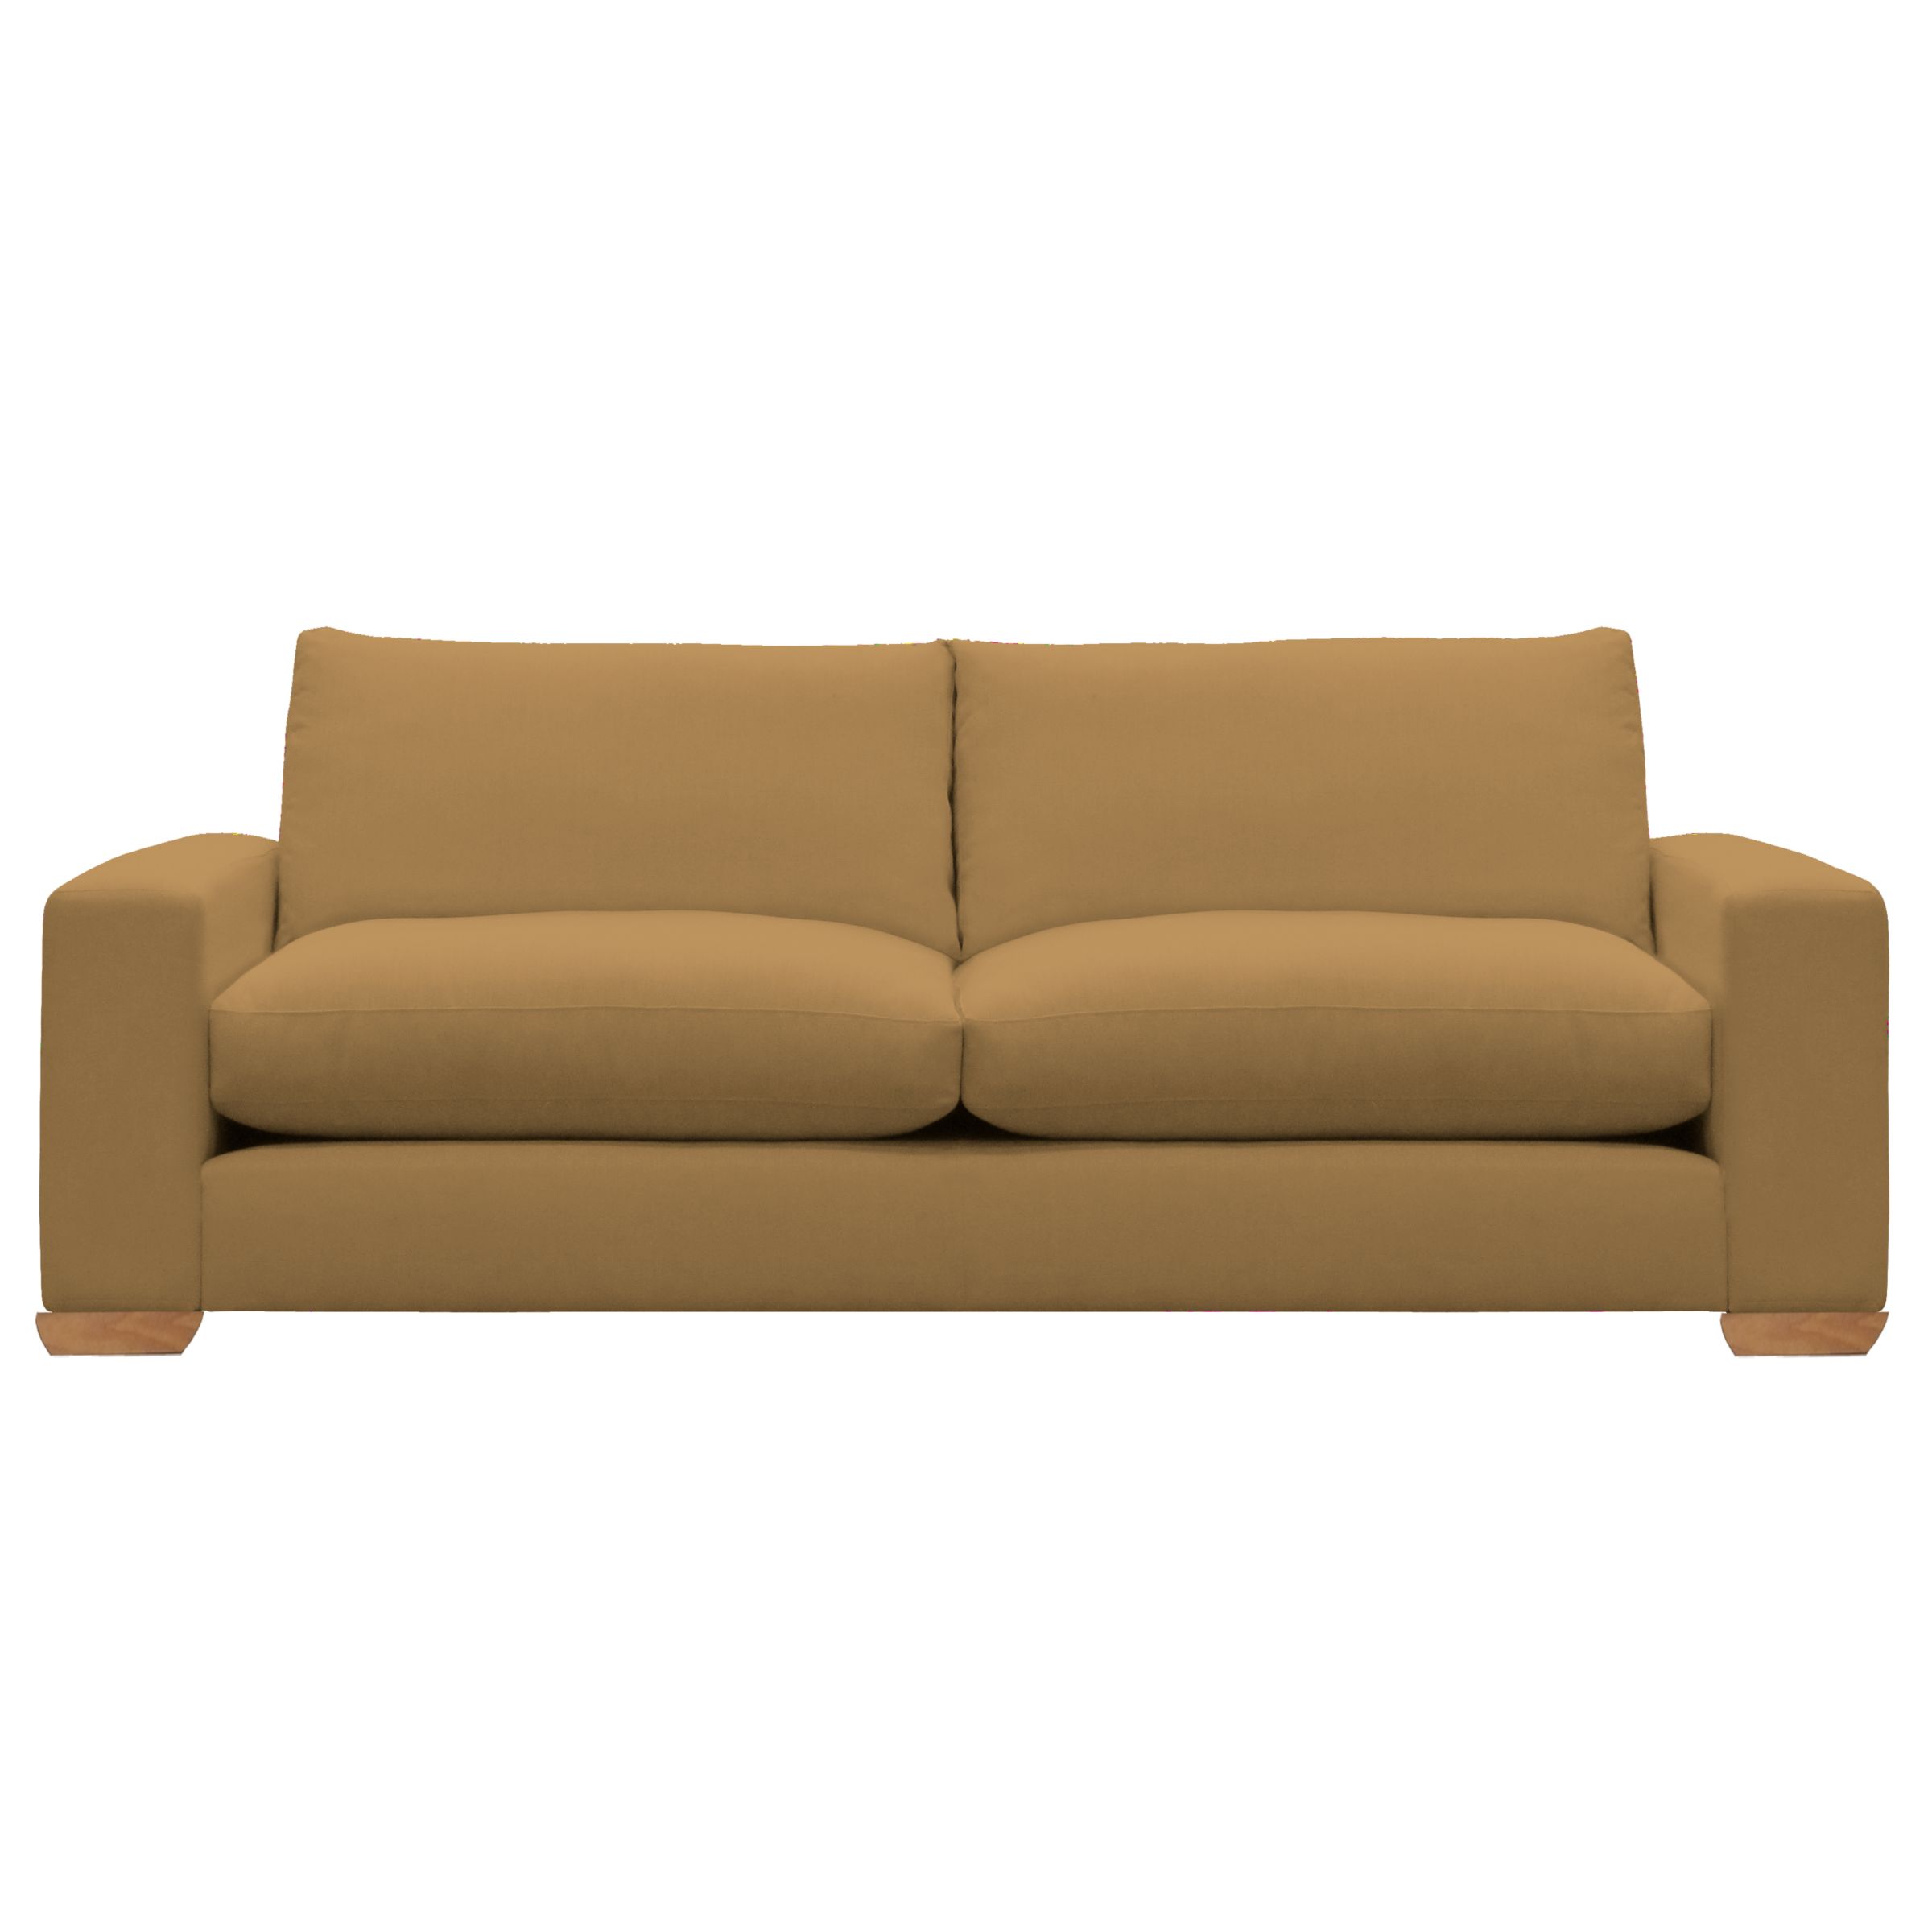 John Lewis Options Wide Arm Grand Sofa, Linley Cafe, width 225cm